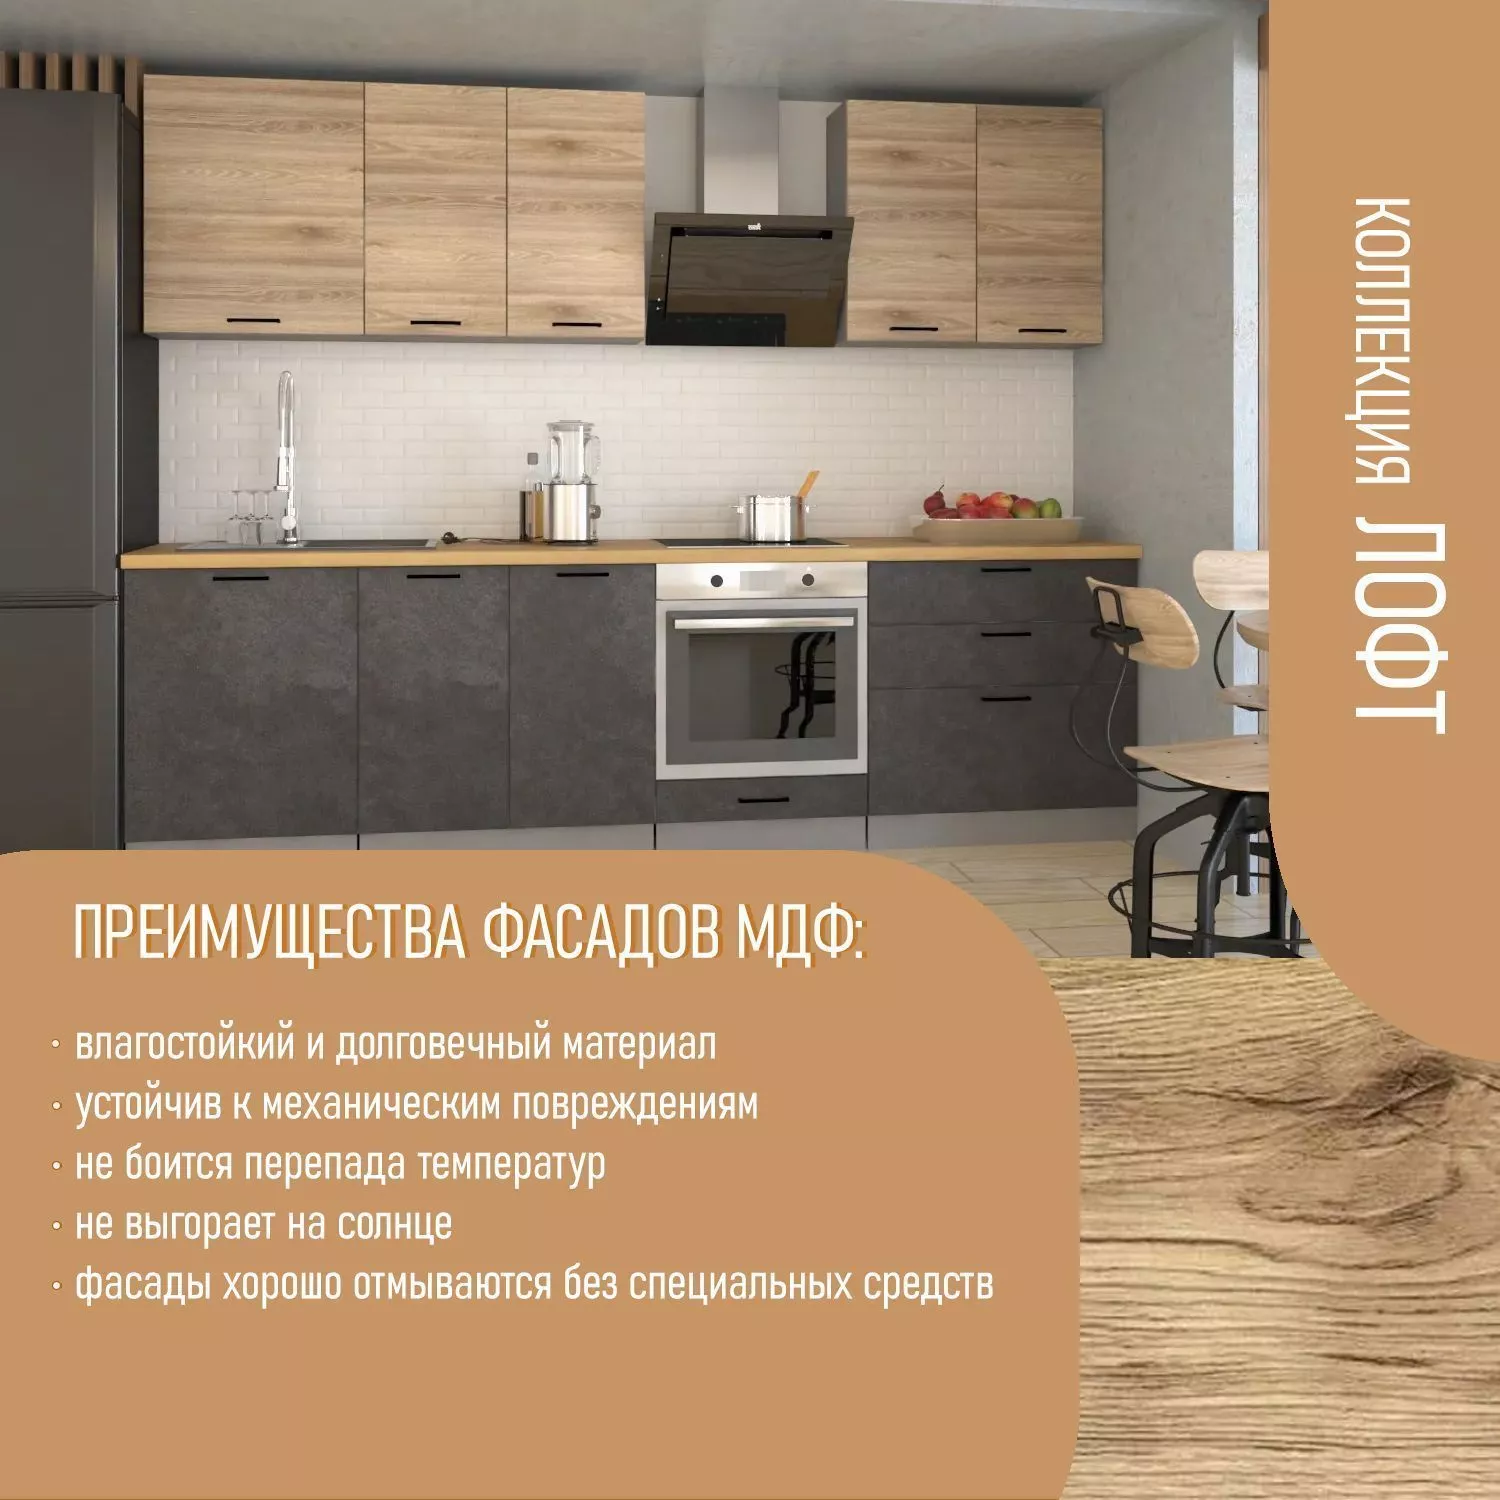 Дизайн кухни 13 кв м